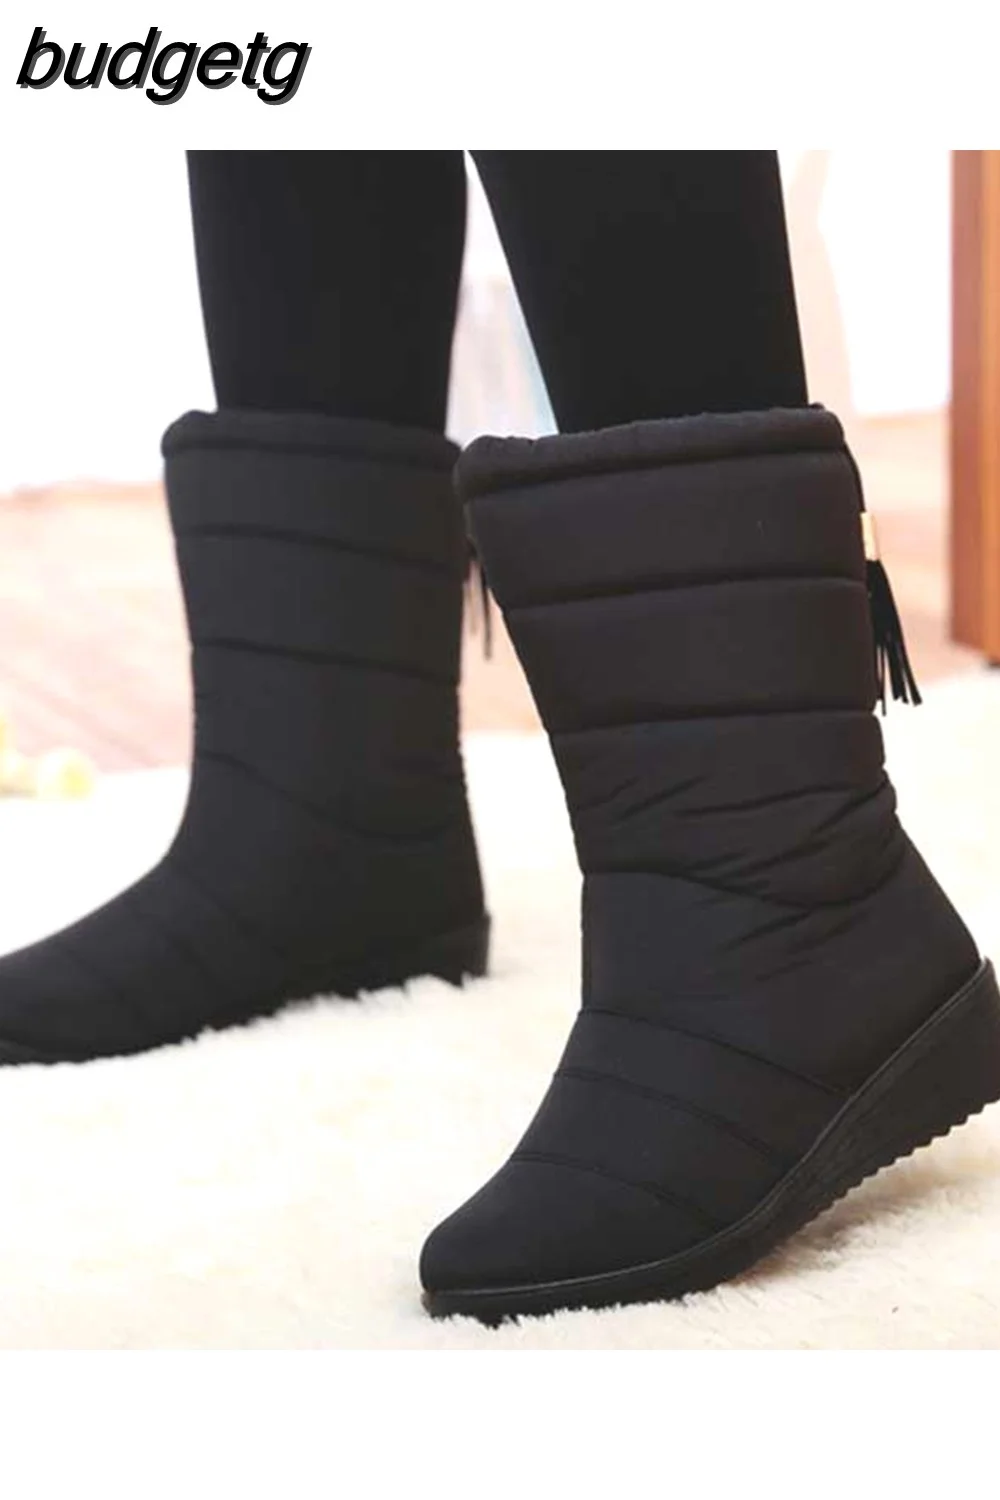 budgetg Women Boots Mid-Calf Down Boots High Bota Waterproof Ladies Snow Winter Shoes Woman Plush Insole Bota Feminina 2023